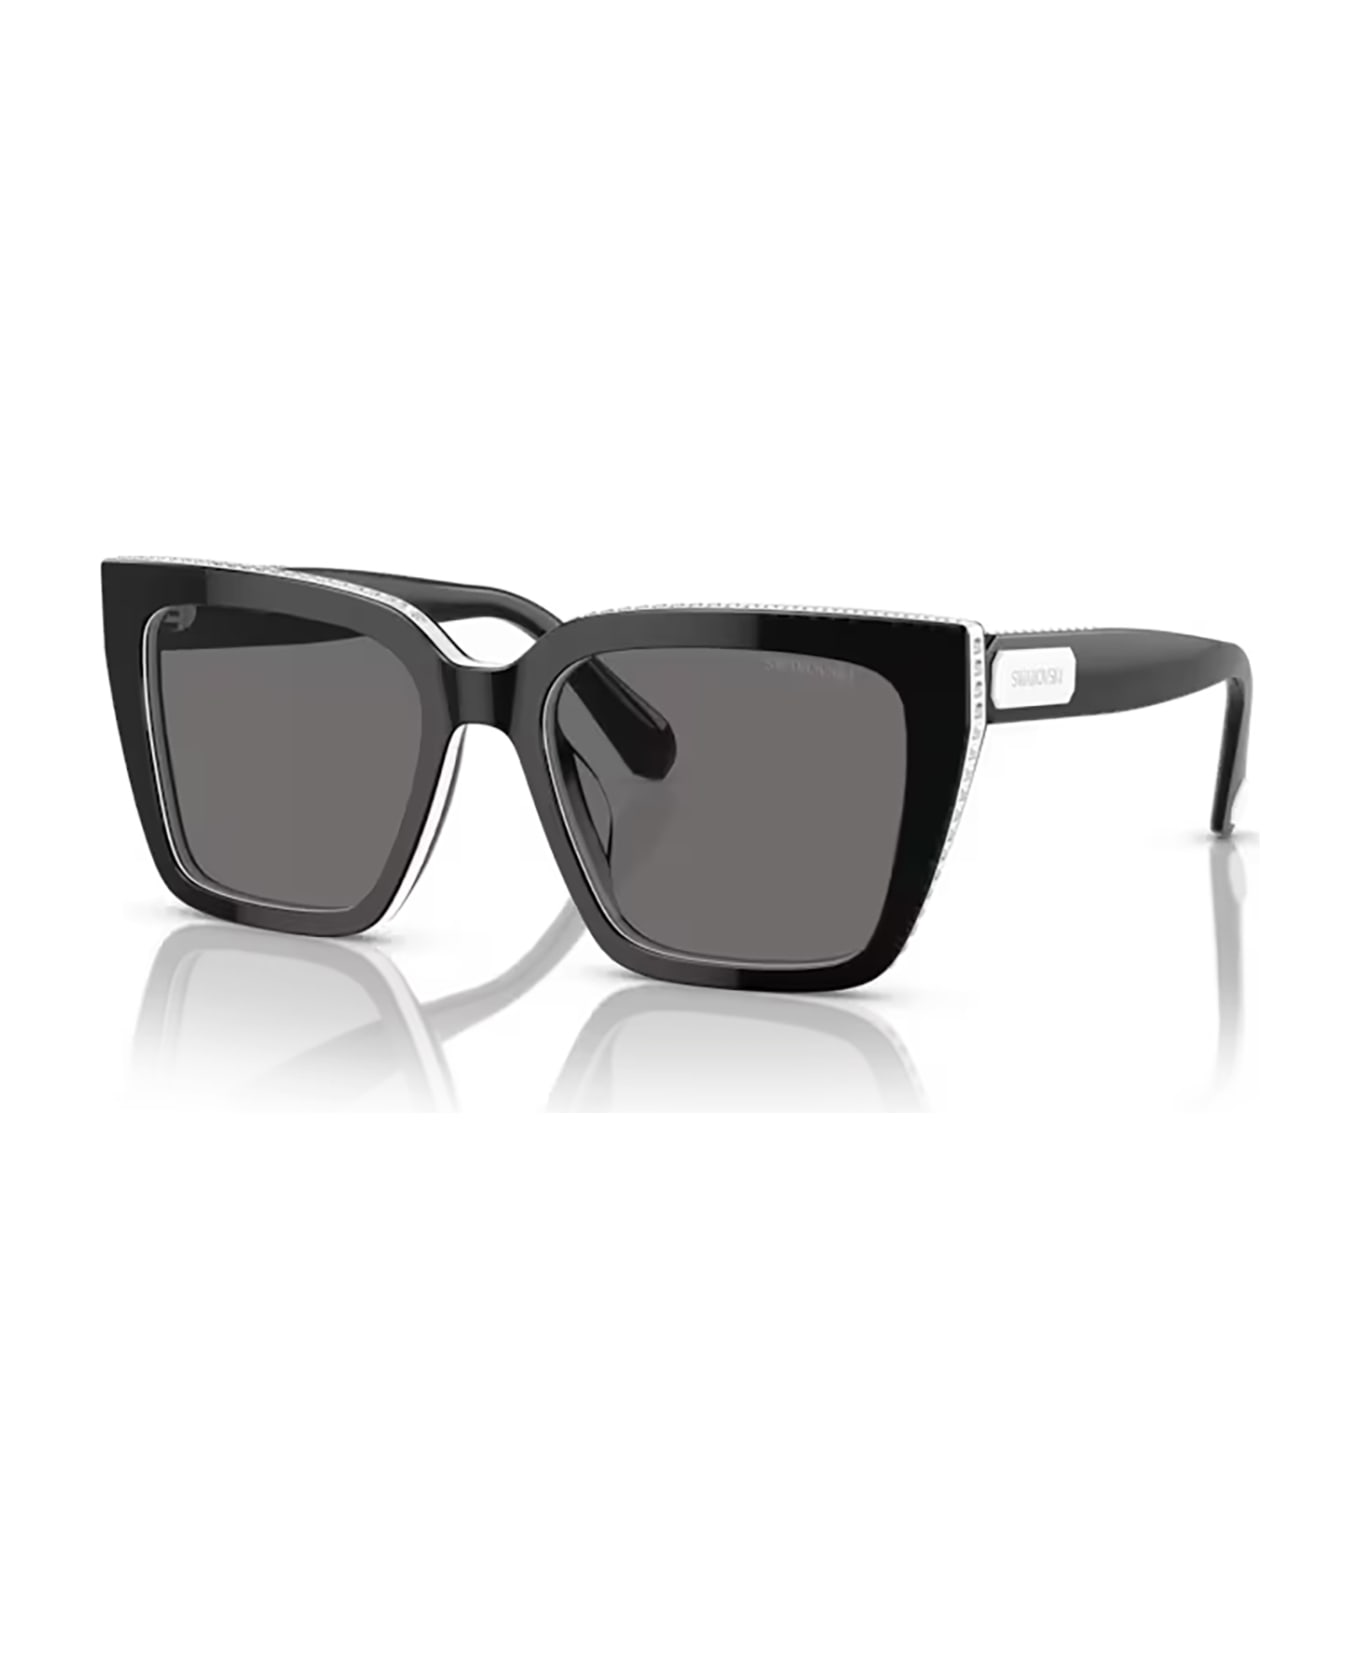 Swarovski Sk6013 Black Sunglasses - Black